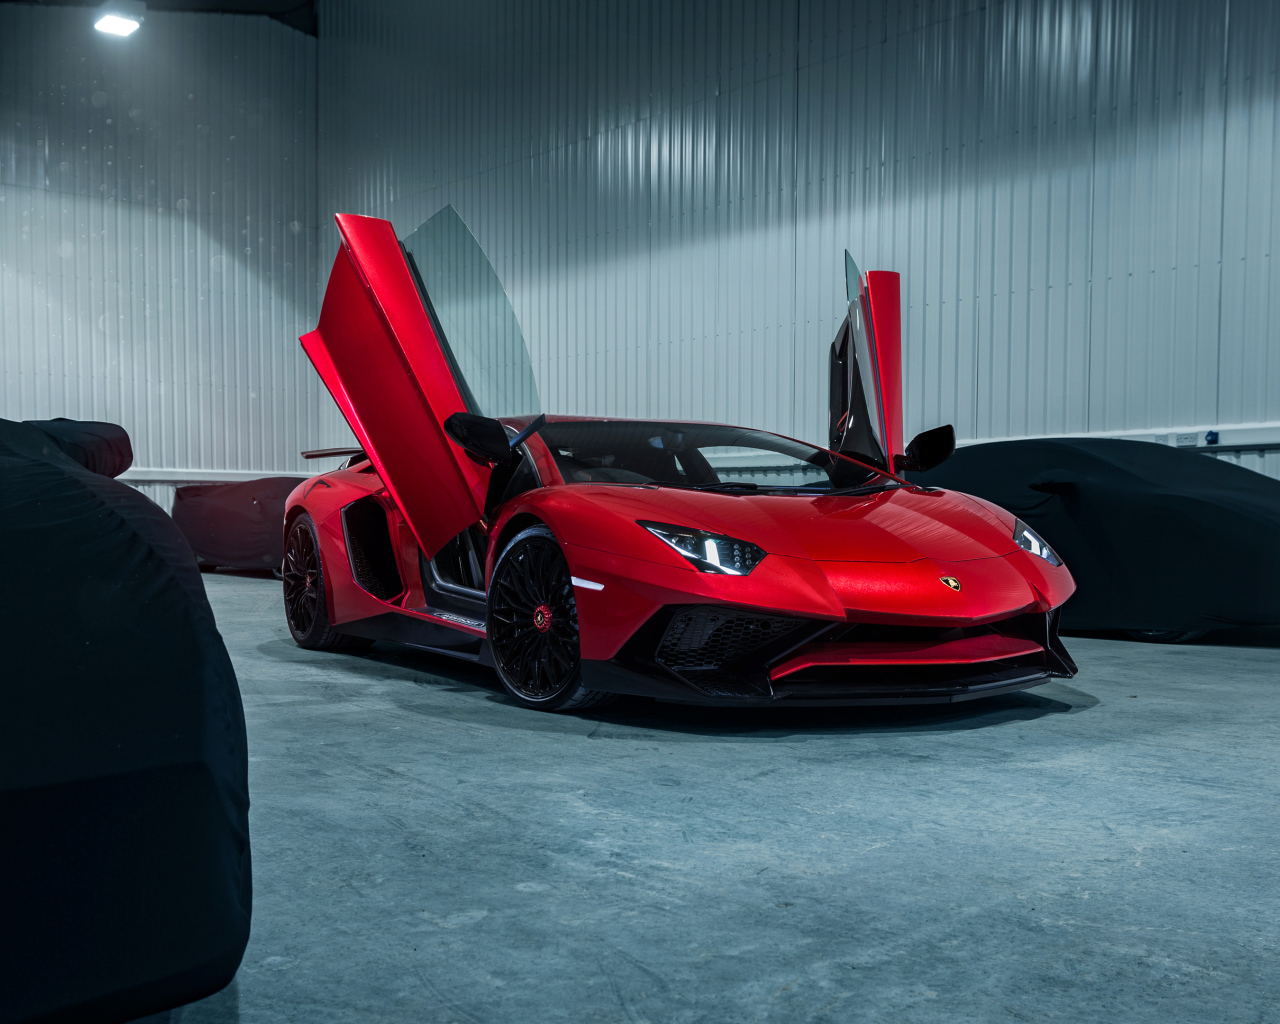 Red car Lamborghini Aventador SV with open doors